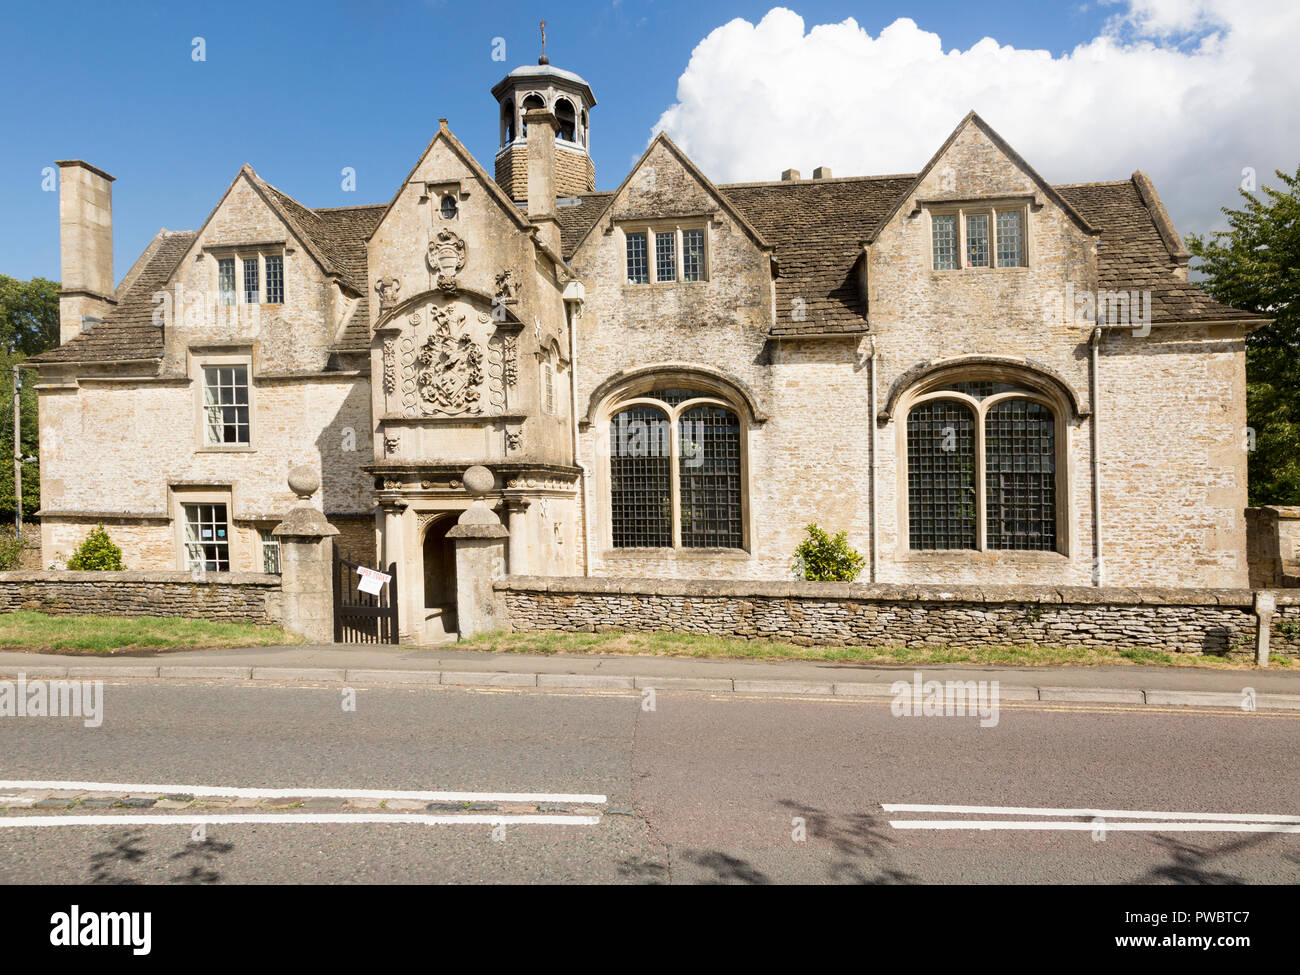 Seventeenth century school and almshouse building, Corsham, Wiltshire, England, UK Stock Photo